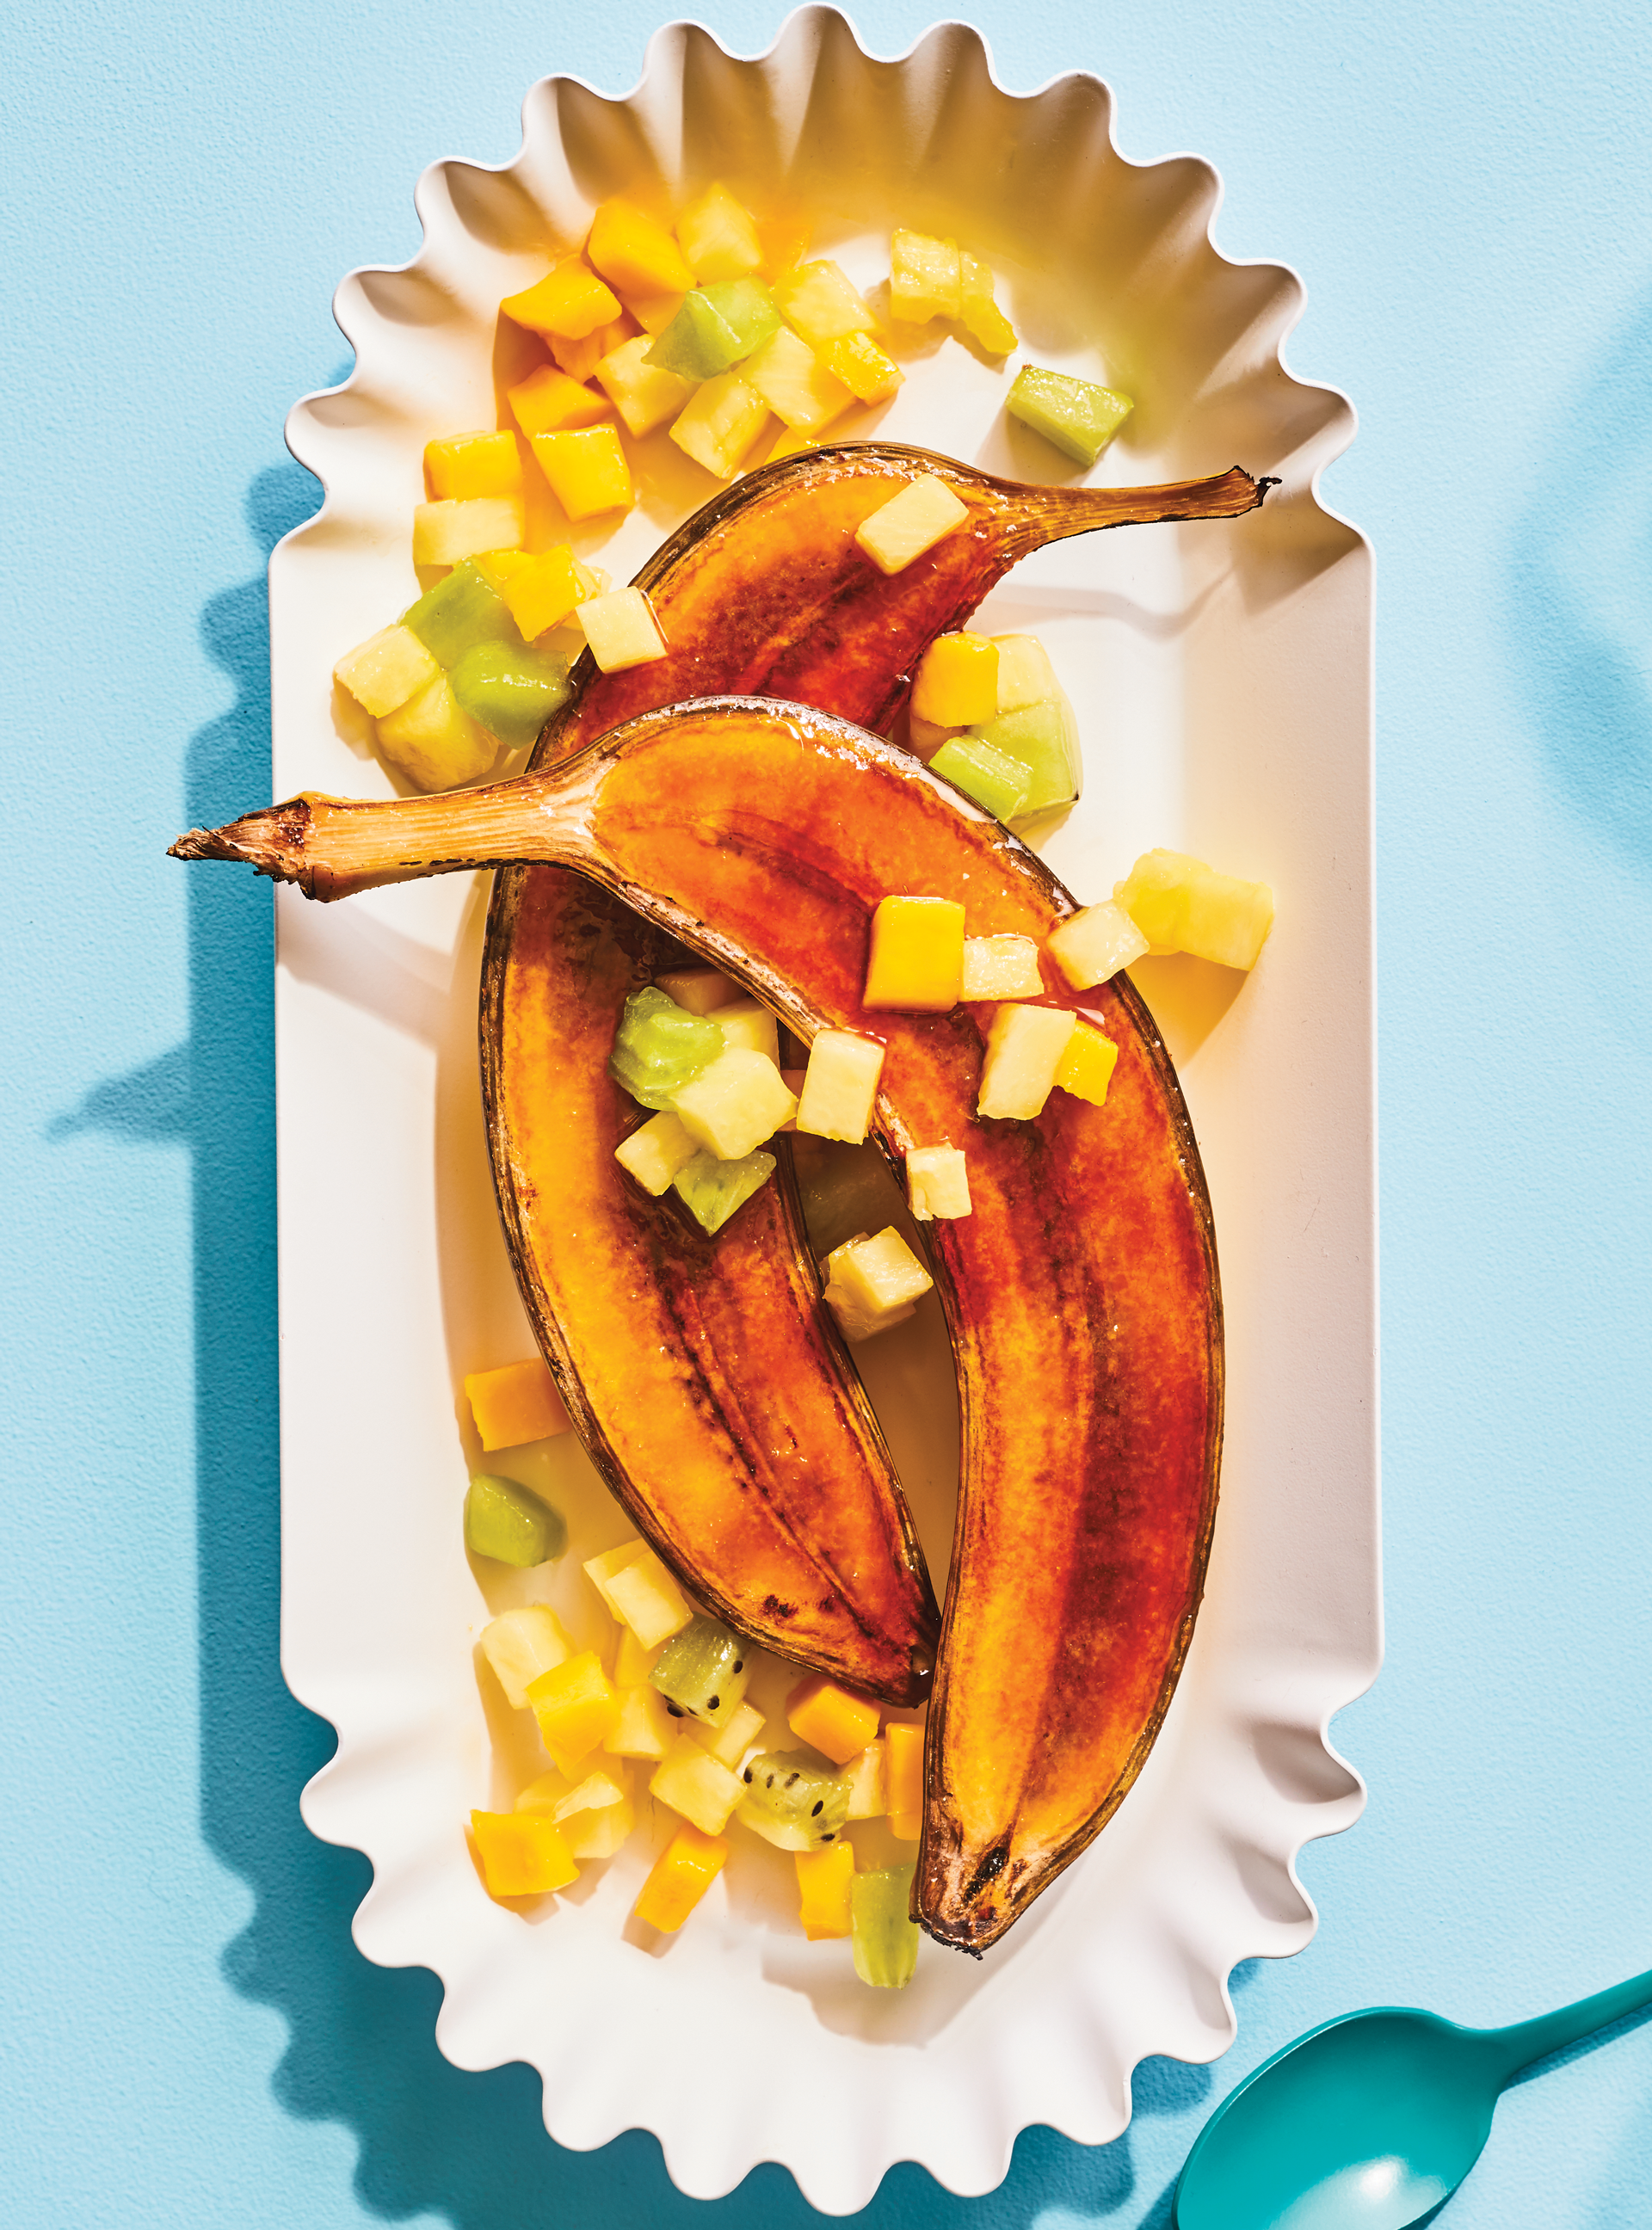 Bananes caramélisées et salade de fruits